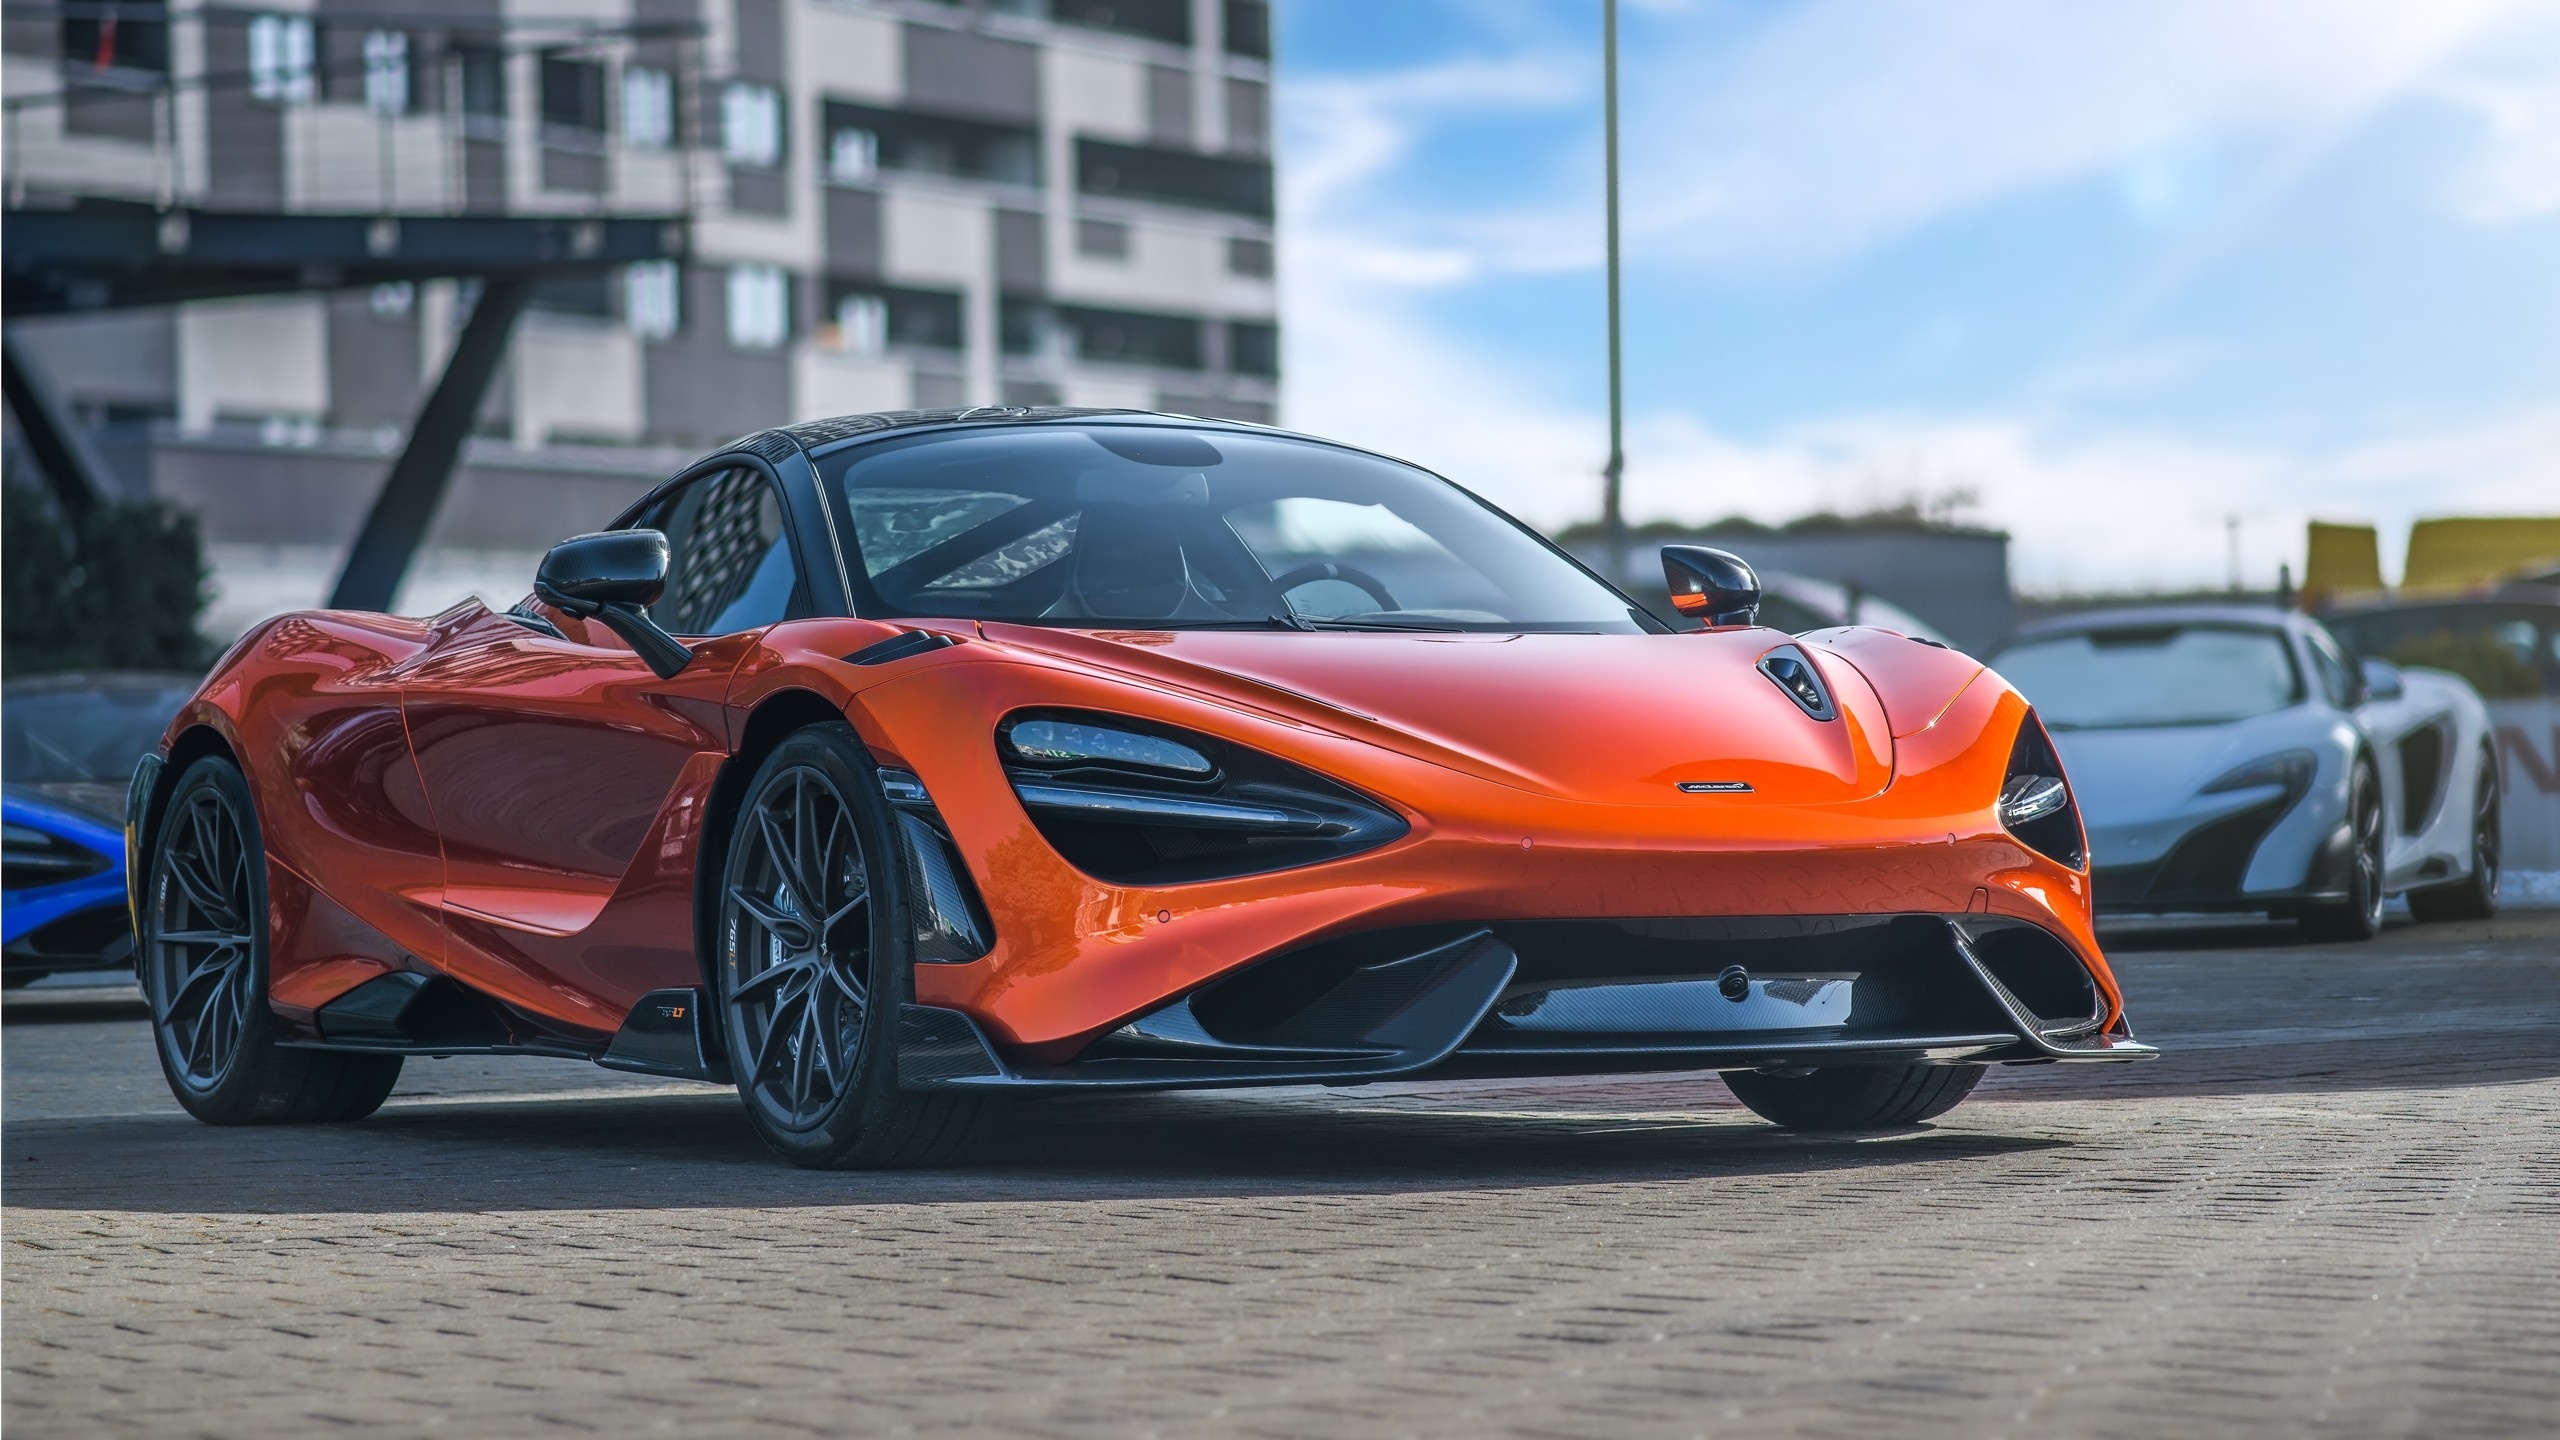 McLaren 765LT, Orange beauty, Free car wallpaper, 2560x1440 HD Desktop